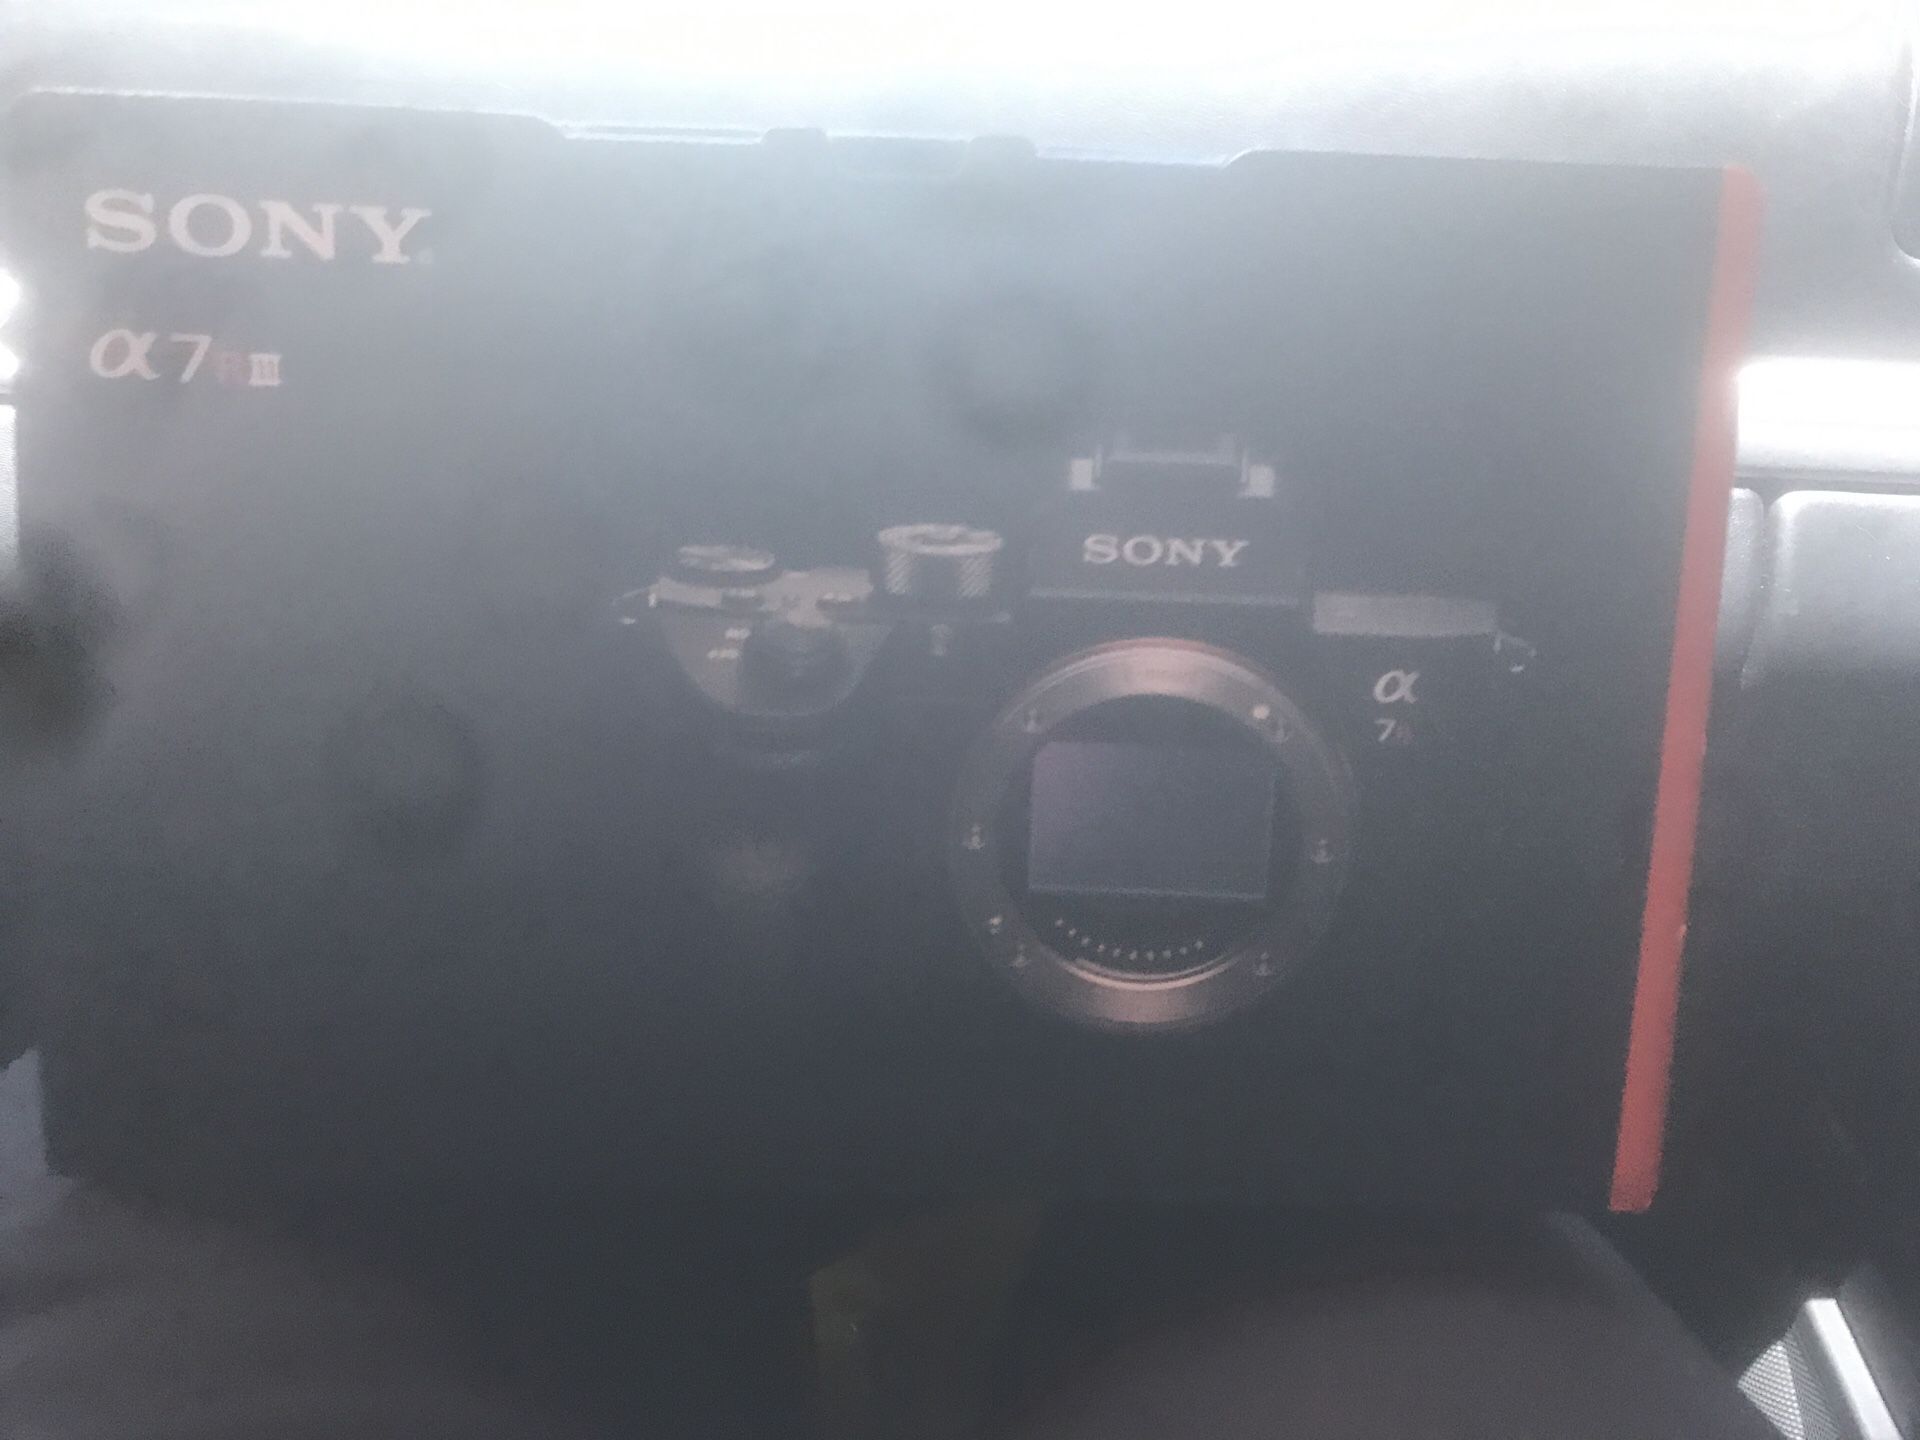 Sony a7r camera